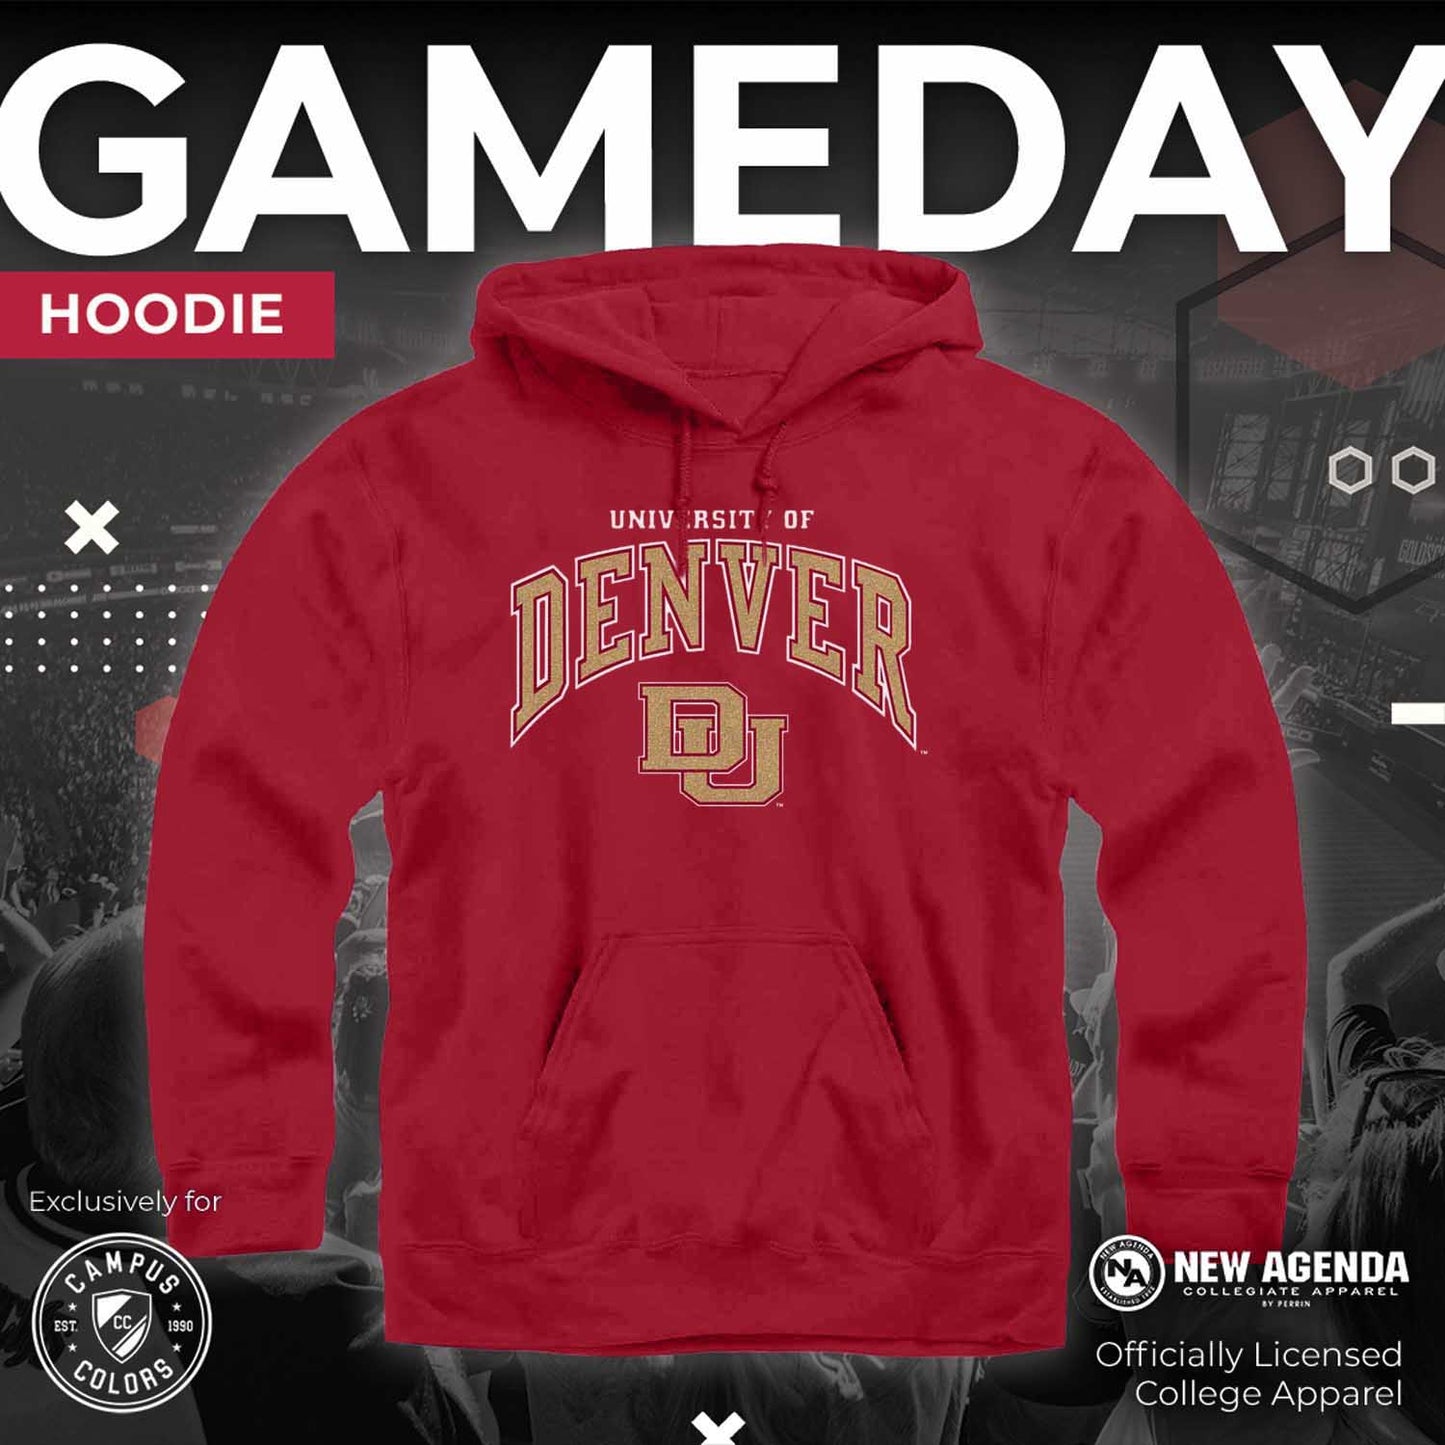 Denver Pioneers Adult Arch & Logo Soft Style Gameday Hooded Sweatshirt - Maroon